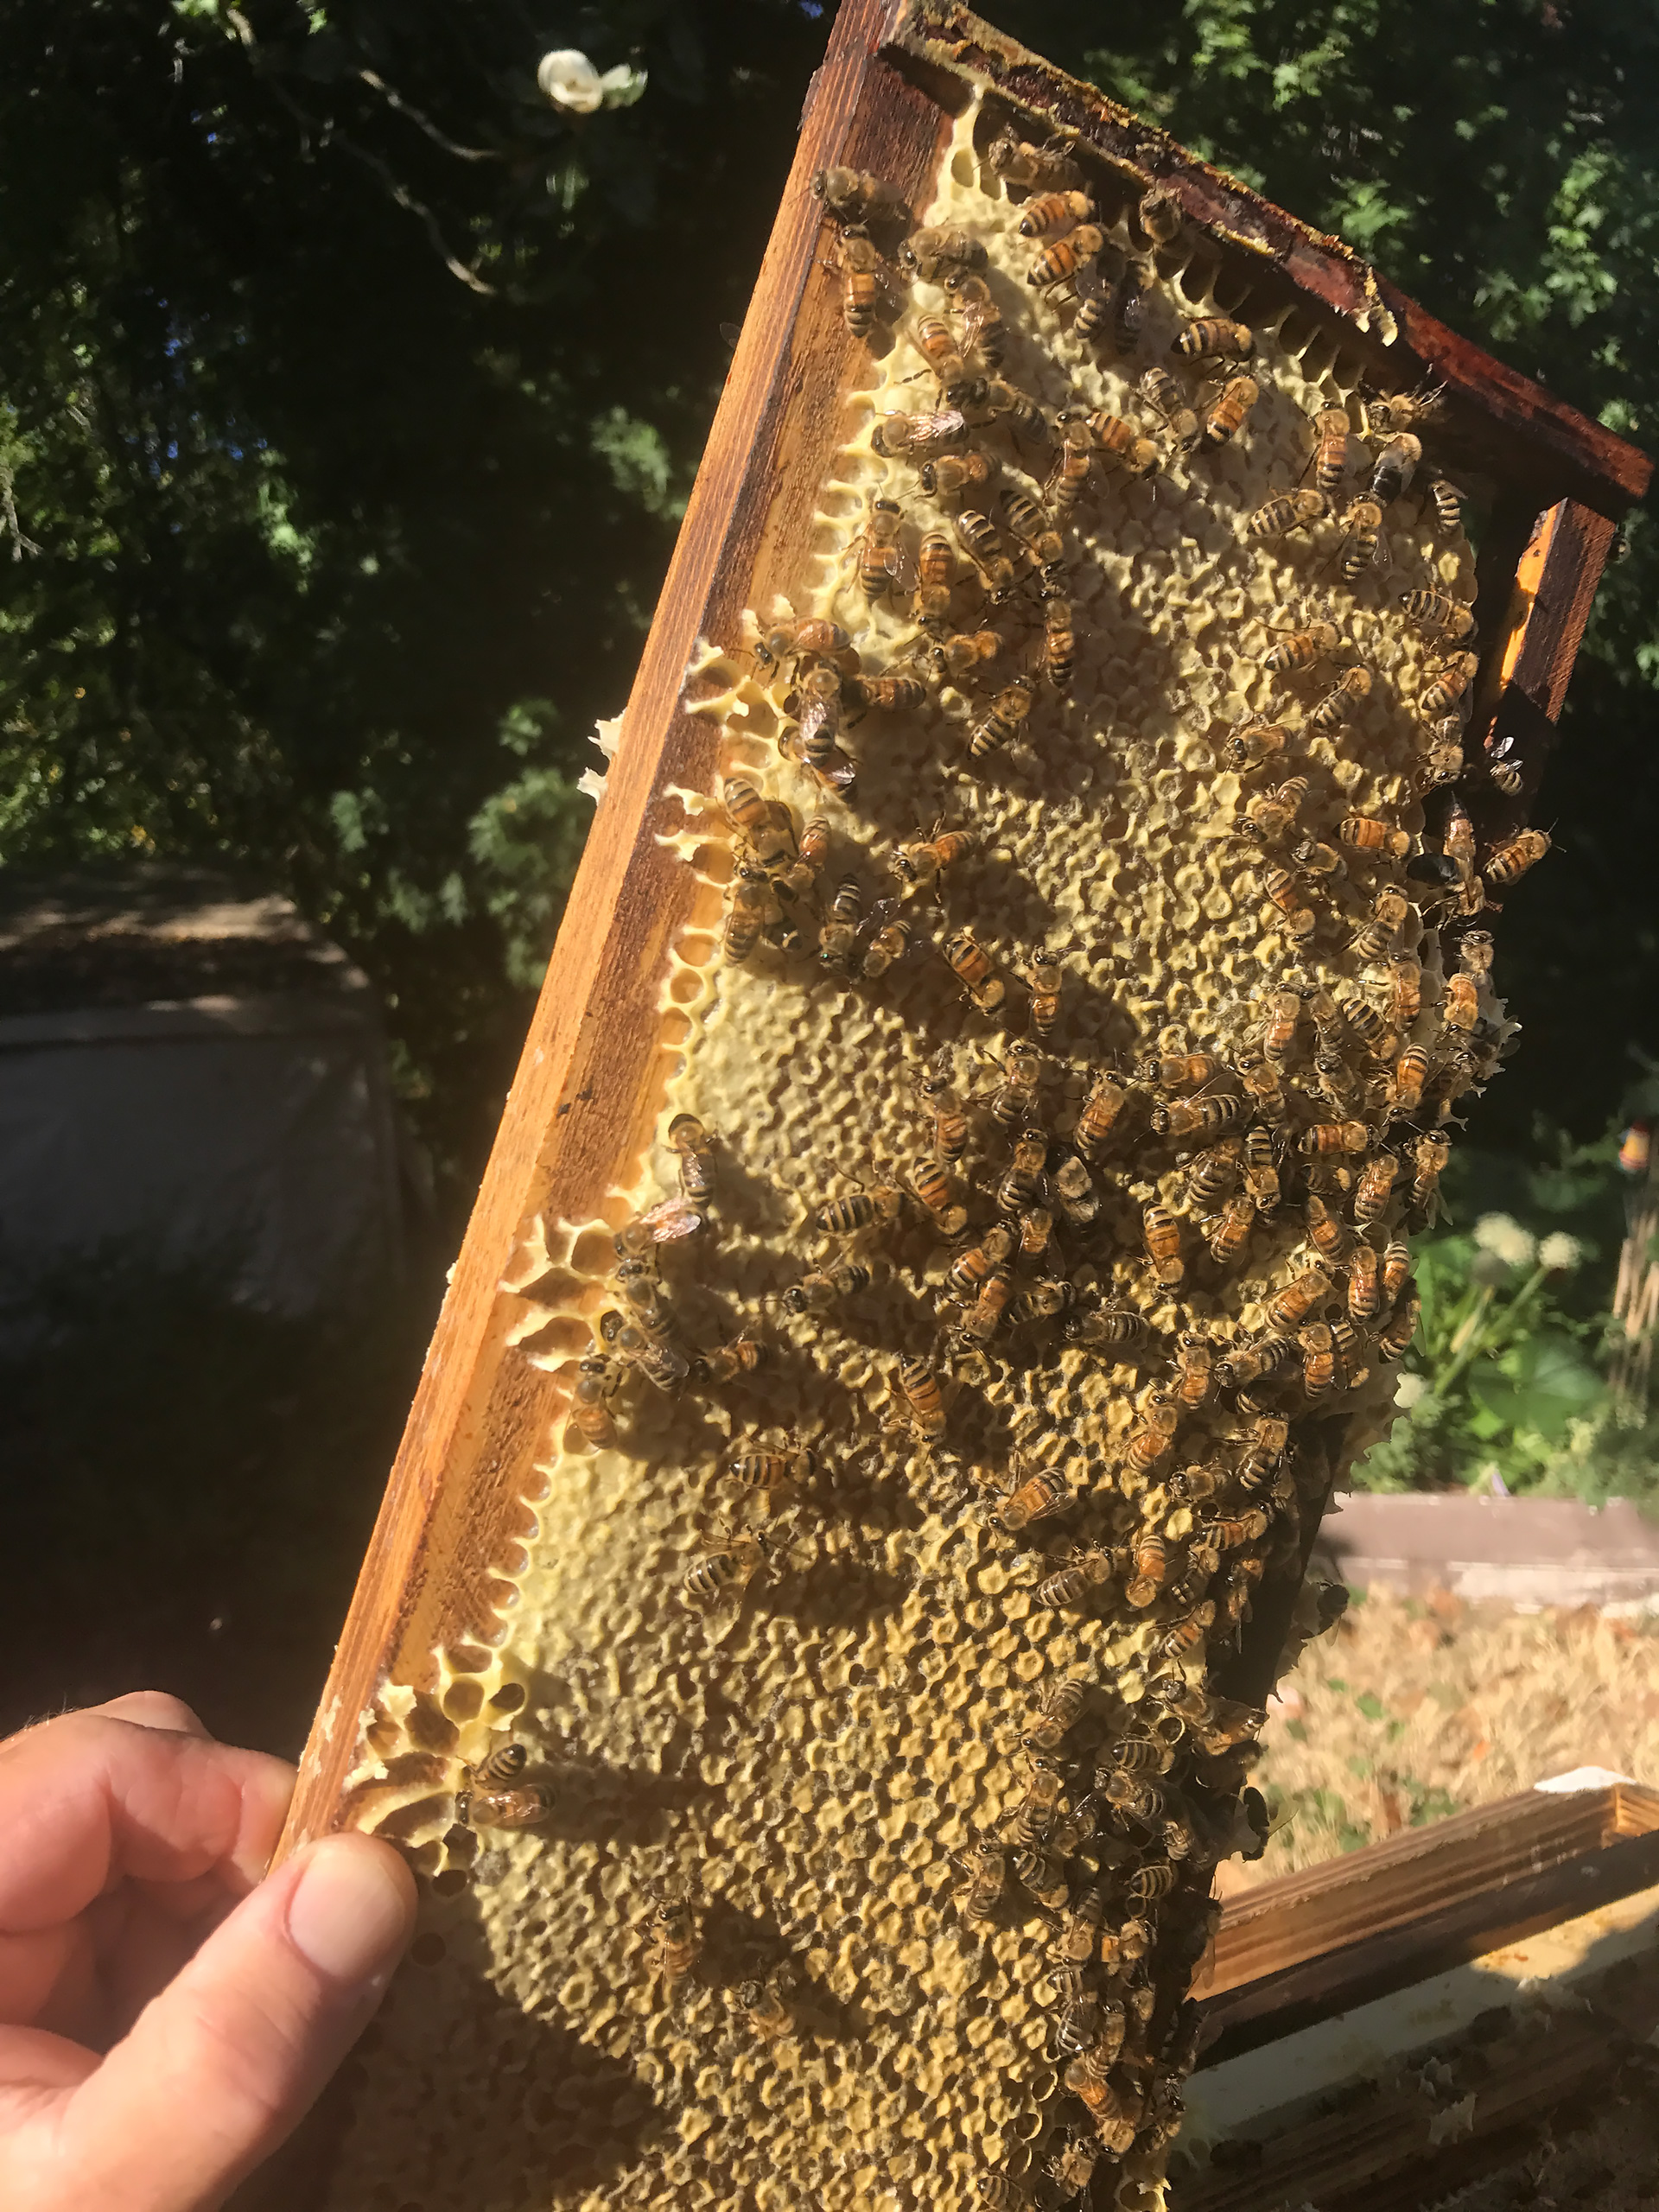 Dewitt Barker pulling honeycomb for the farmer’s market from Santa Rosa hives.